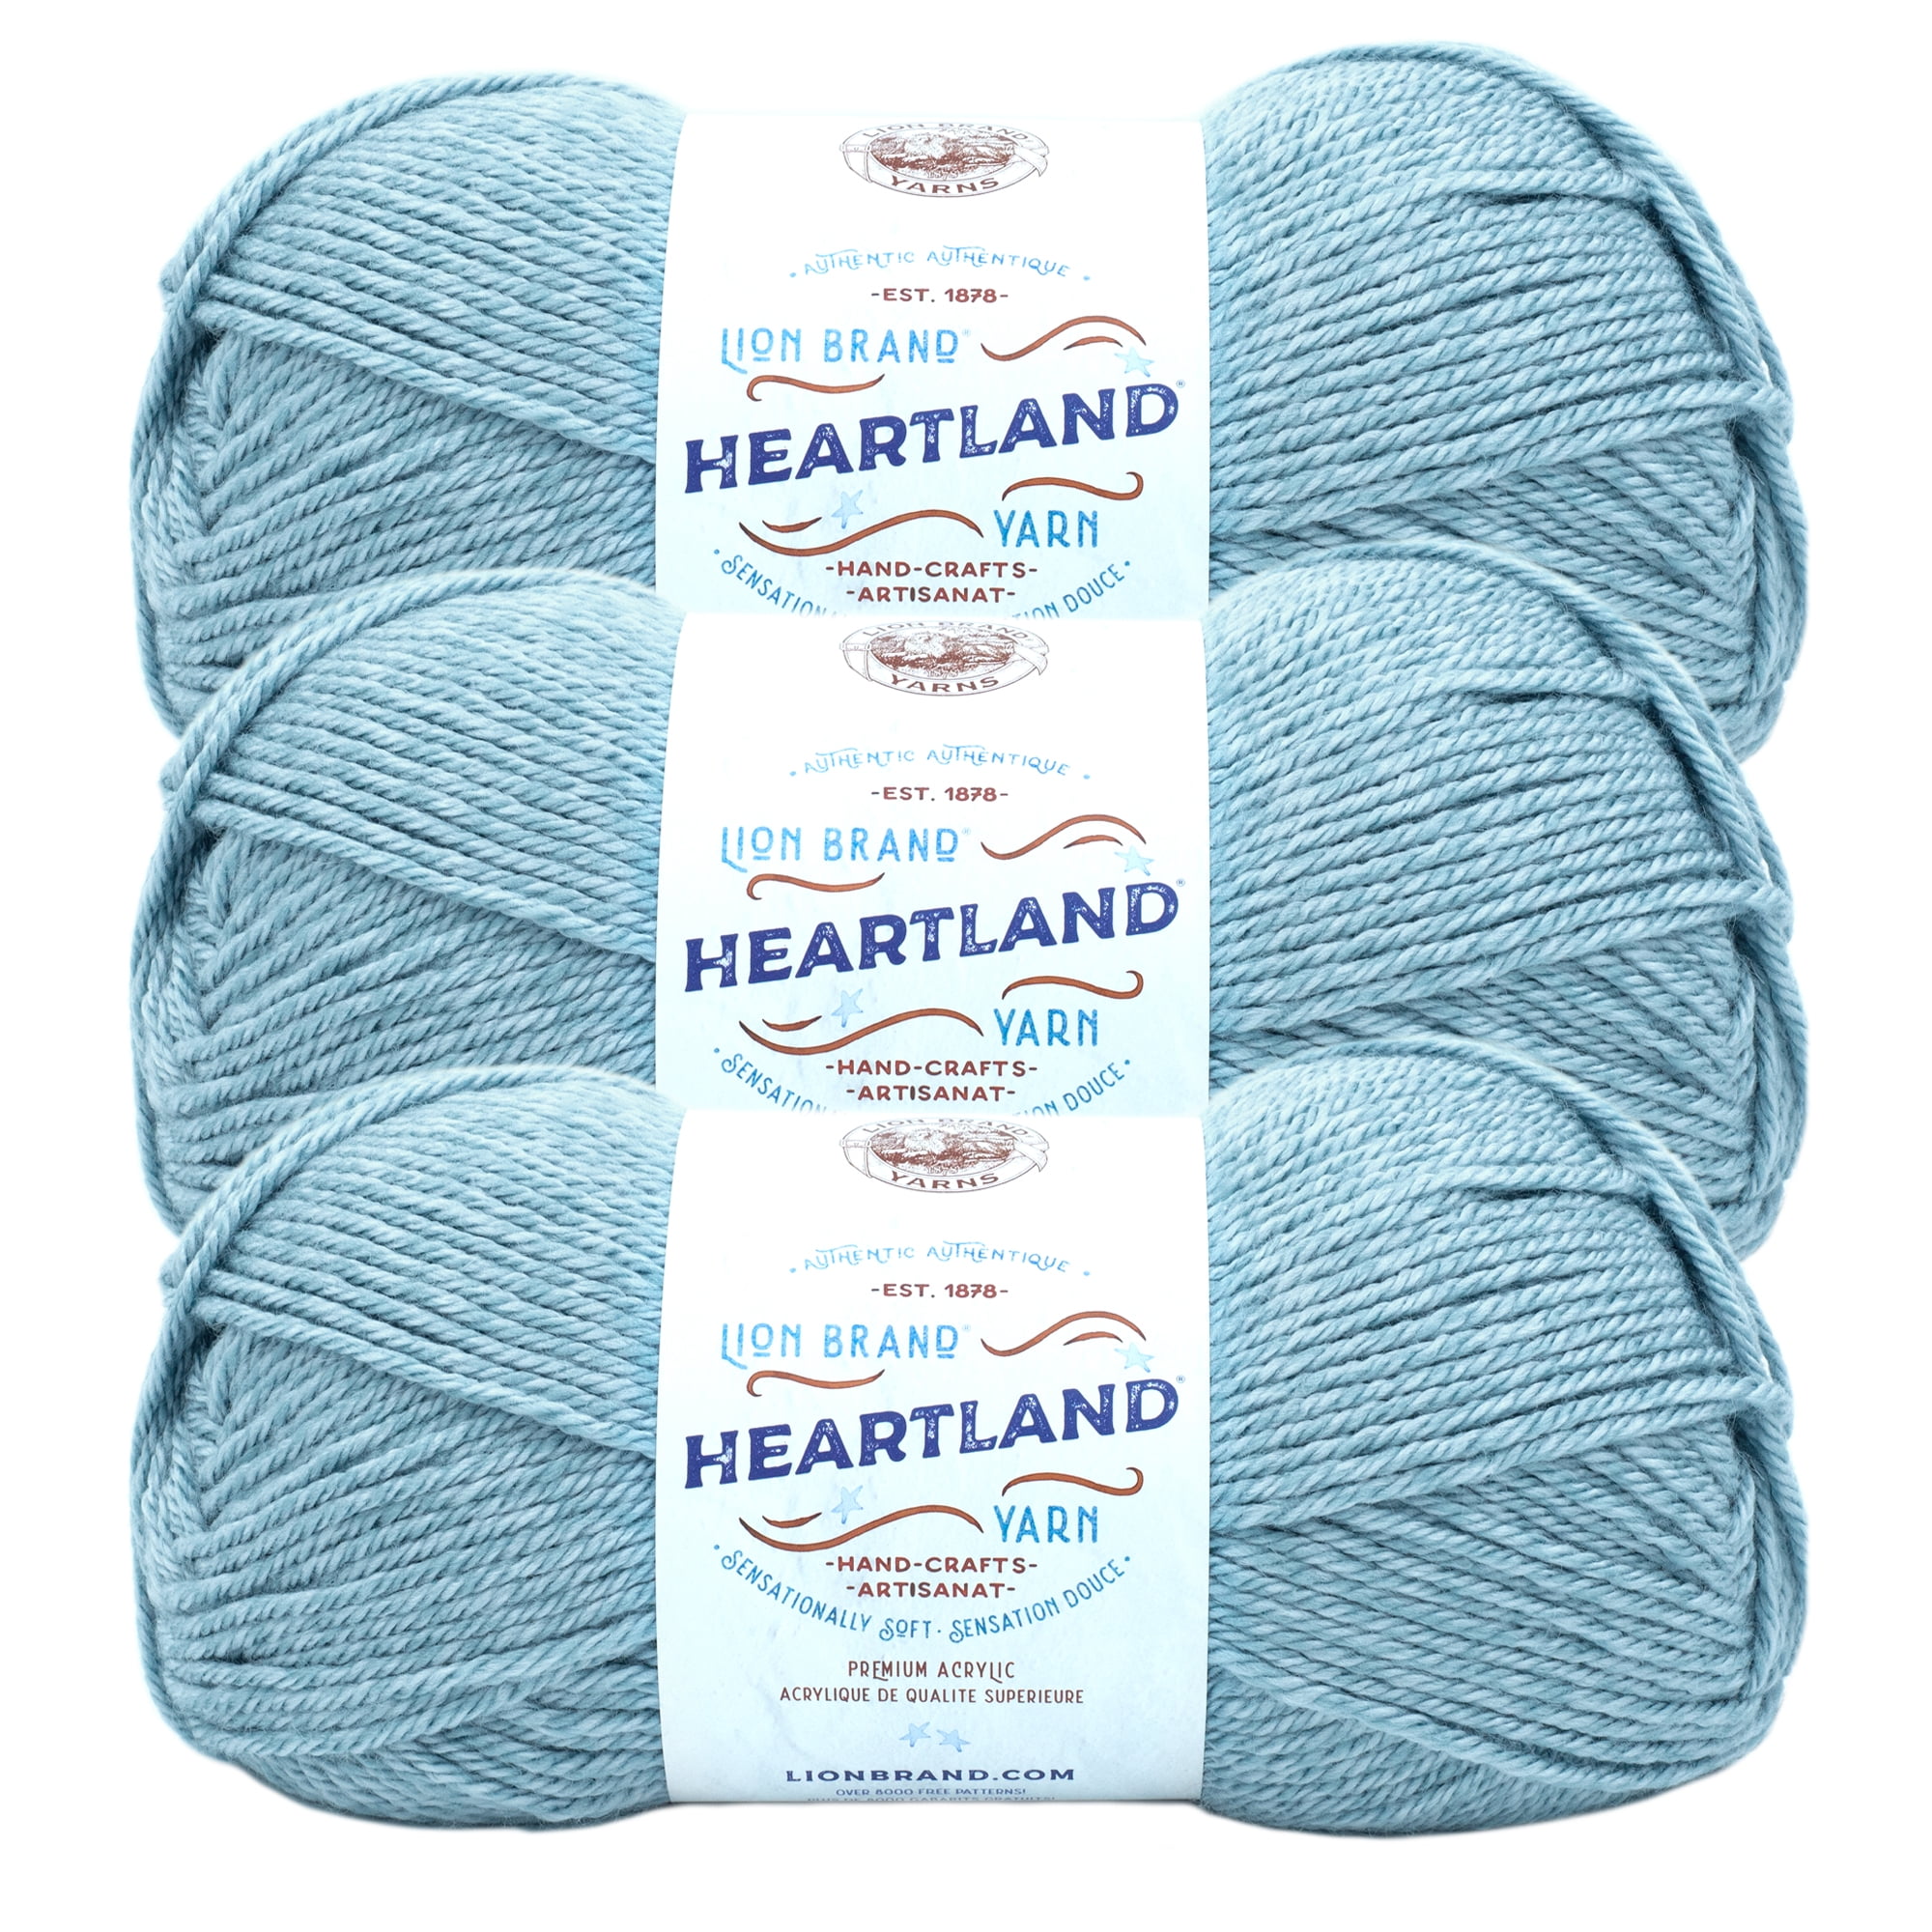 Lion Brand Yarn Heartland Yarn for Crocheting, Knitting, and Weaving, Multicolor Yarn, 3-Pack, Voyageurs